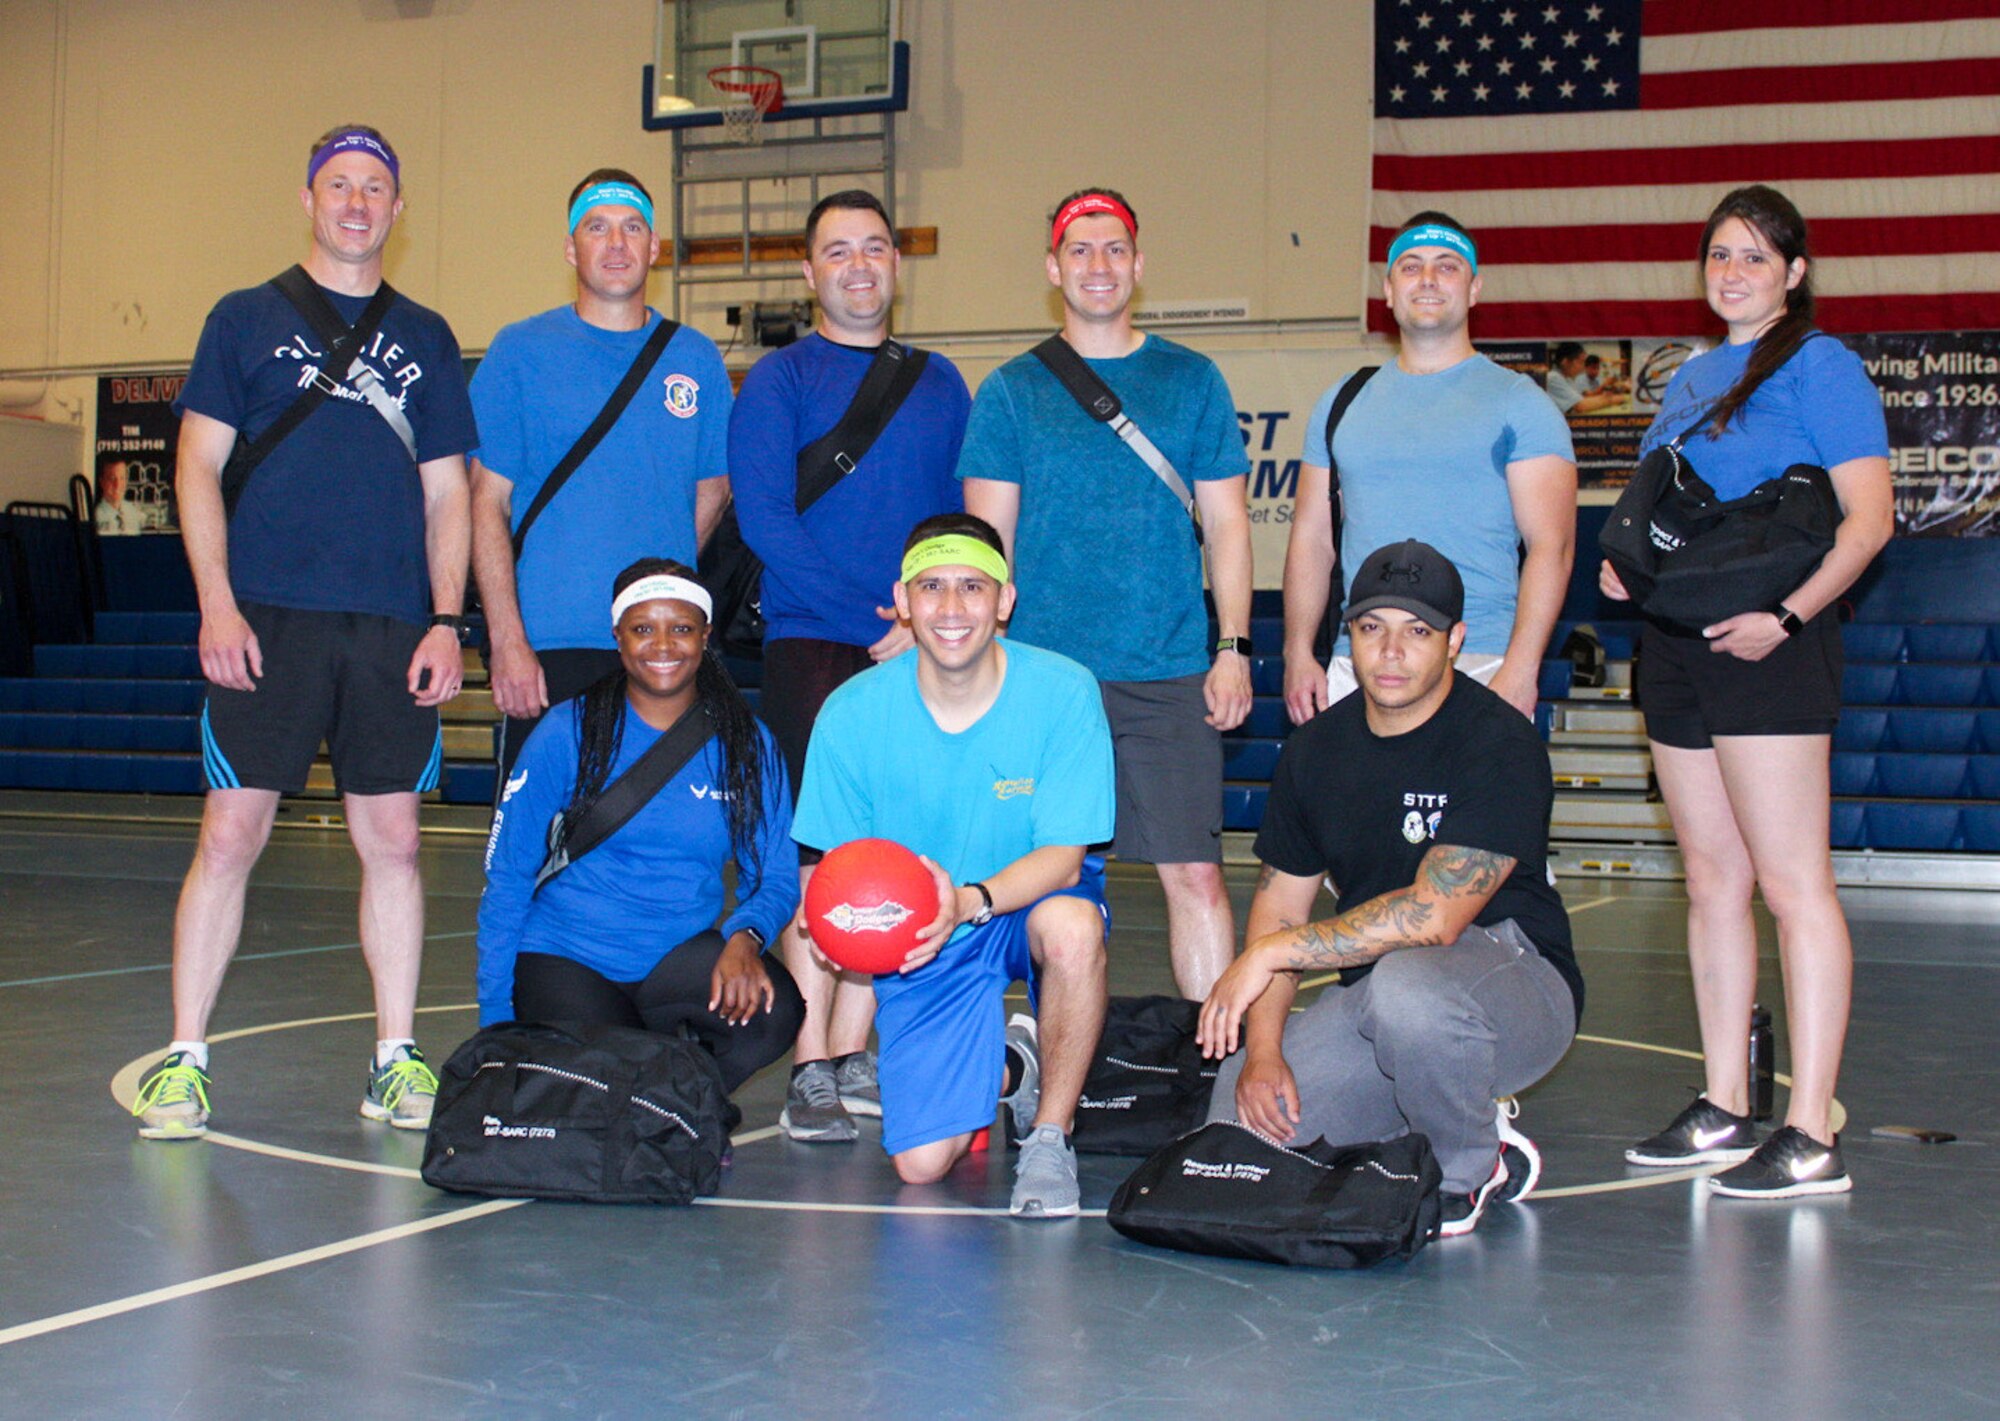 Dodgeball tournament to raise SAPR awareness > Nellis Air Force Base > News